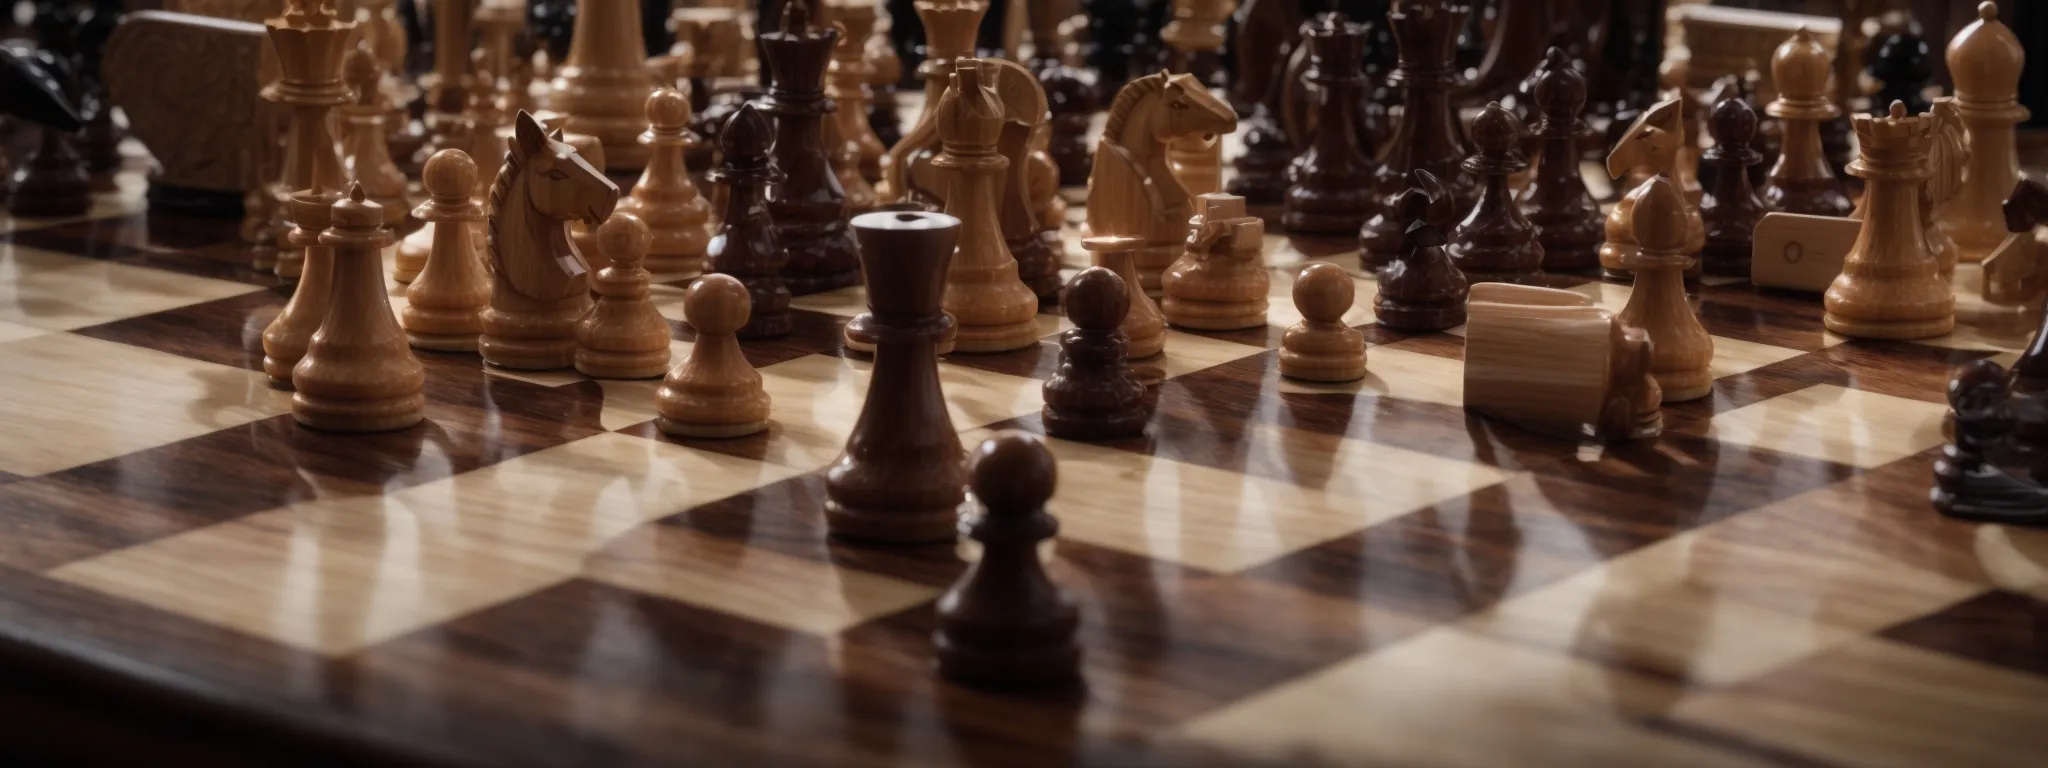 a chessboard mid-game, symbolizing strategic maneuvering in ymyl link-building efforts.